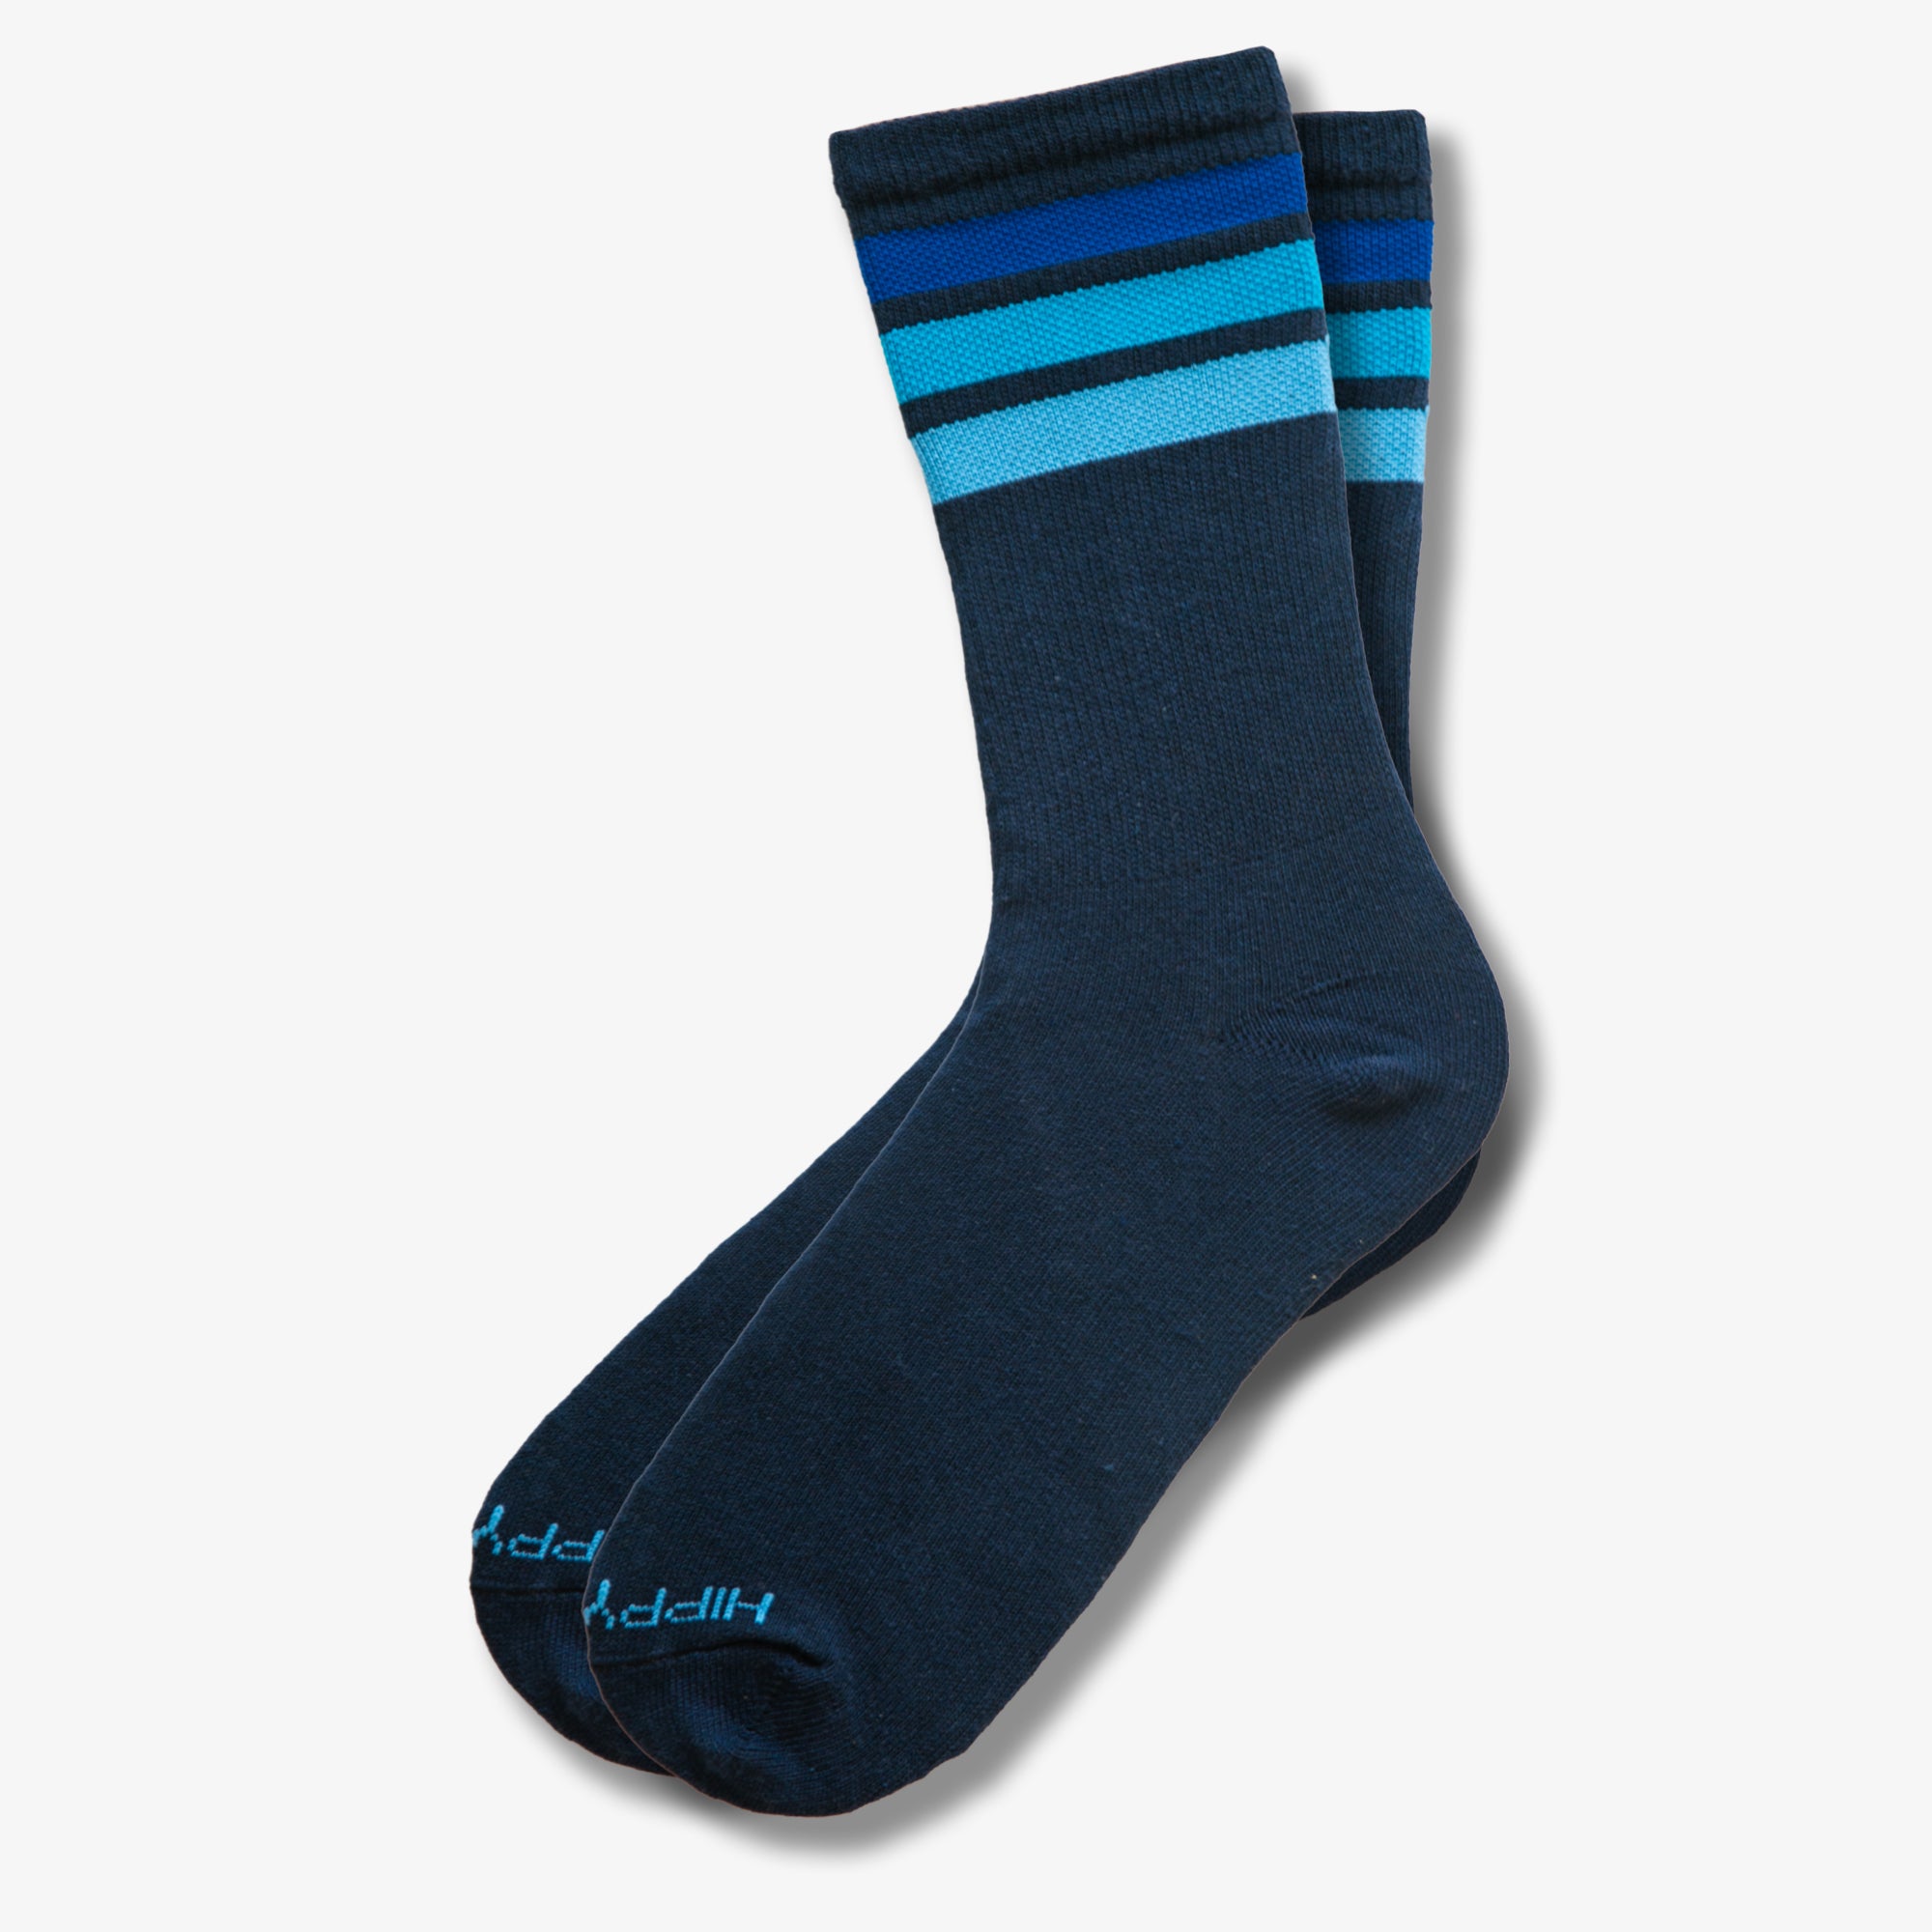 USA Made 3-Stripe Gym Socks - Hippy Feet 7-pack (SMALL)